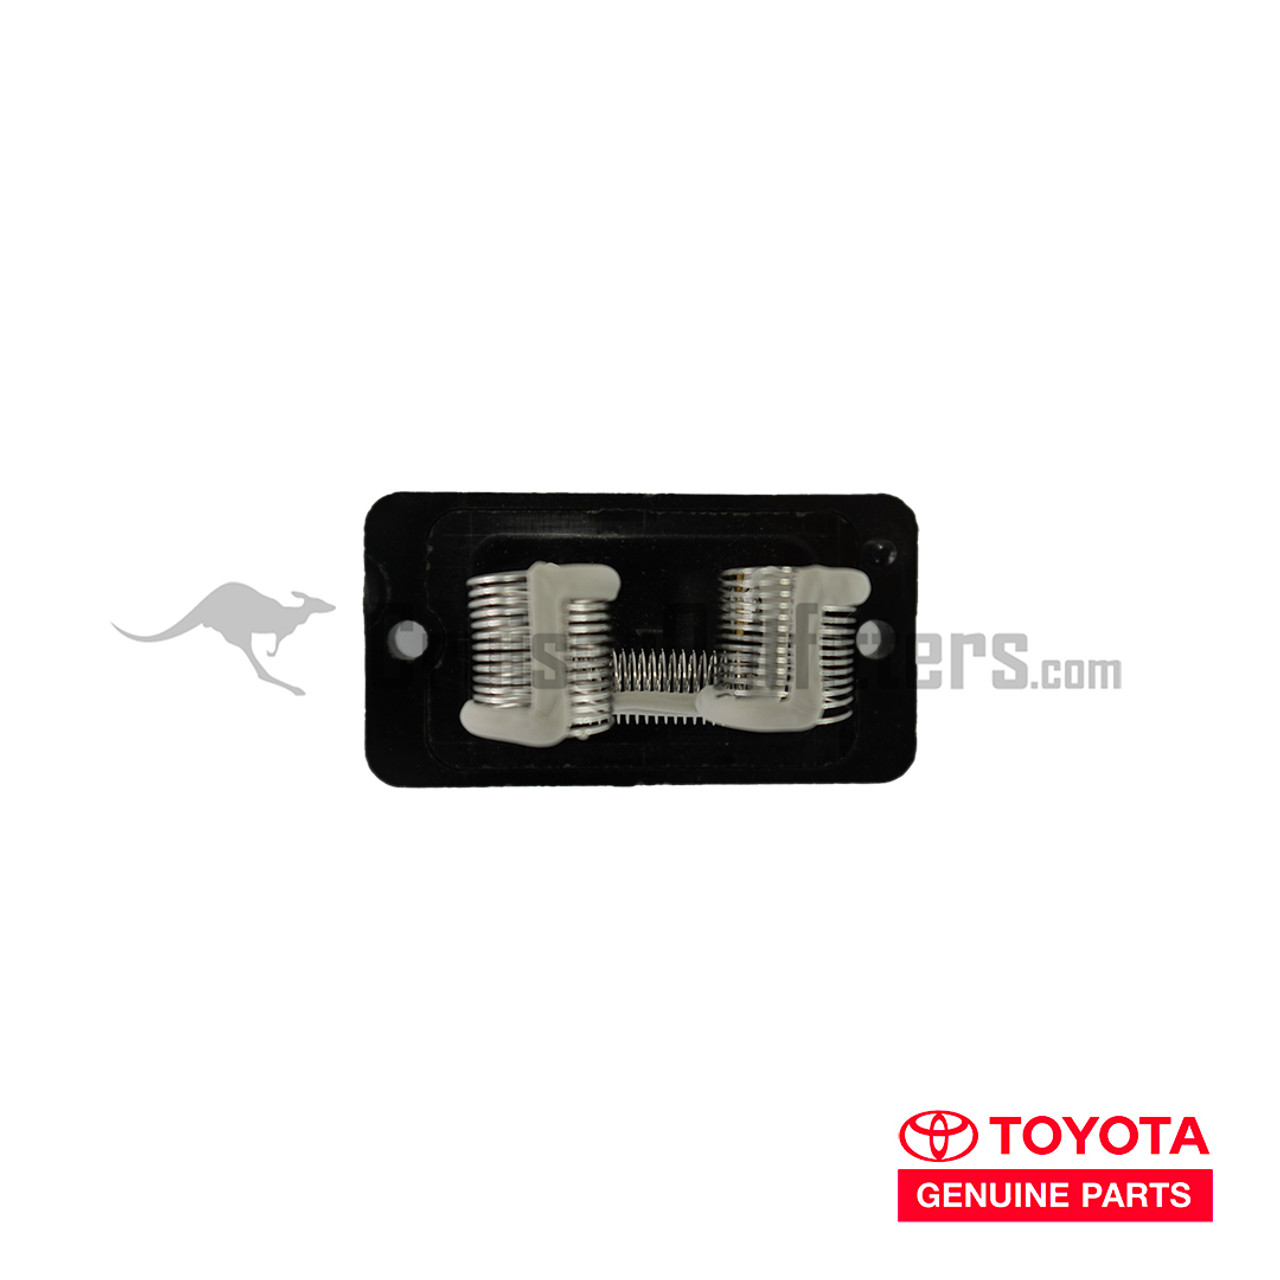 Front Heater Blower Motor Resistor - OEM Toyota - Fits 24V 6x Serie